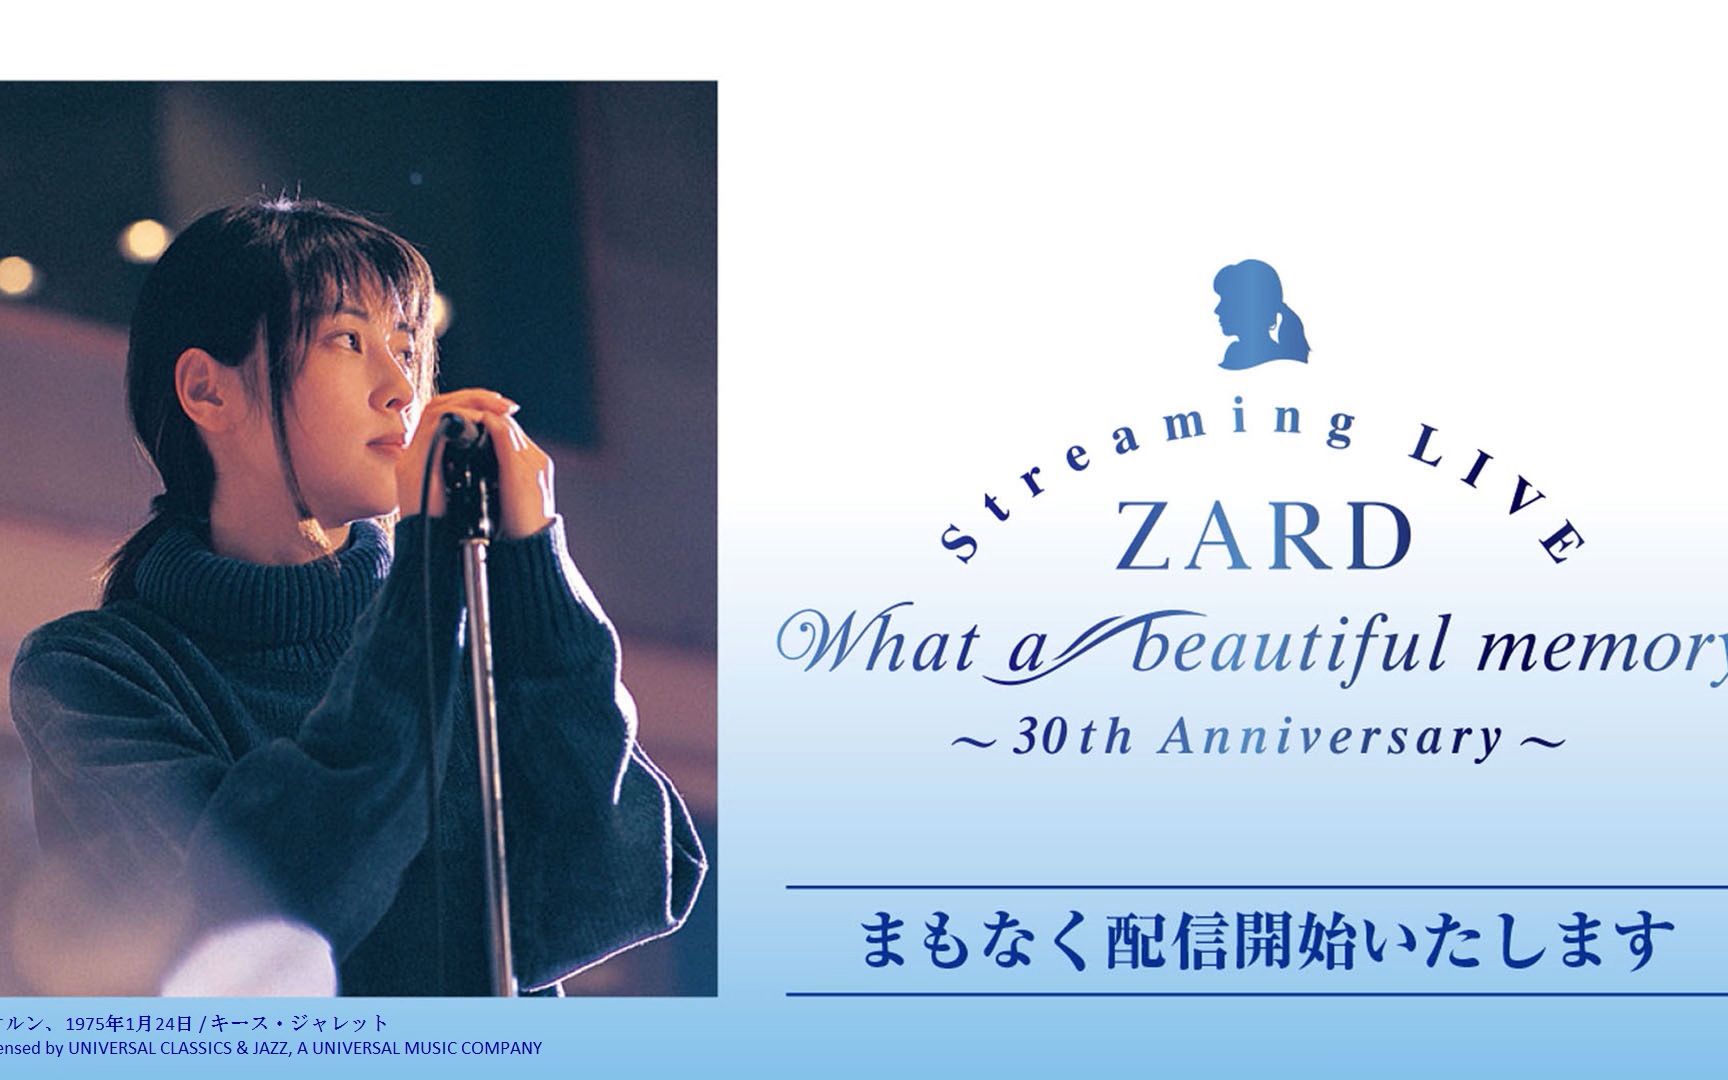 2.ZARD Streaming LIVE - What a beautiful(Av799215078,P1)_1_哔哩哔哩_bilibili